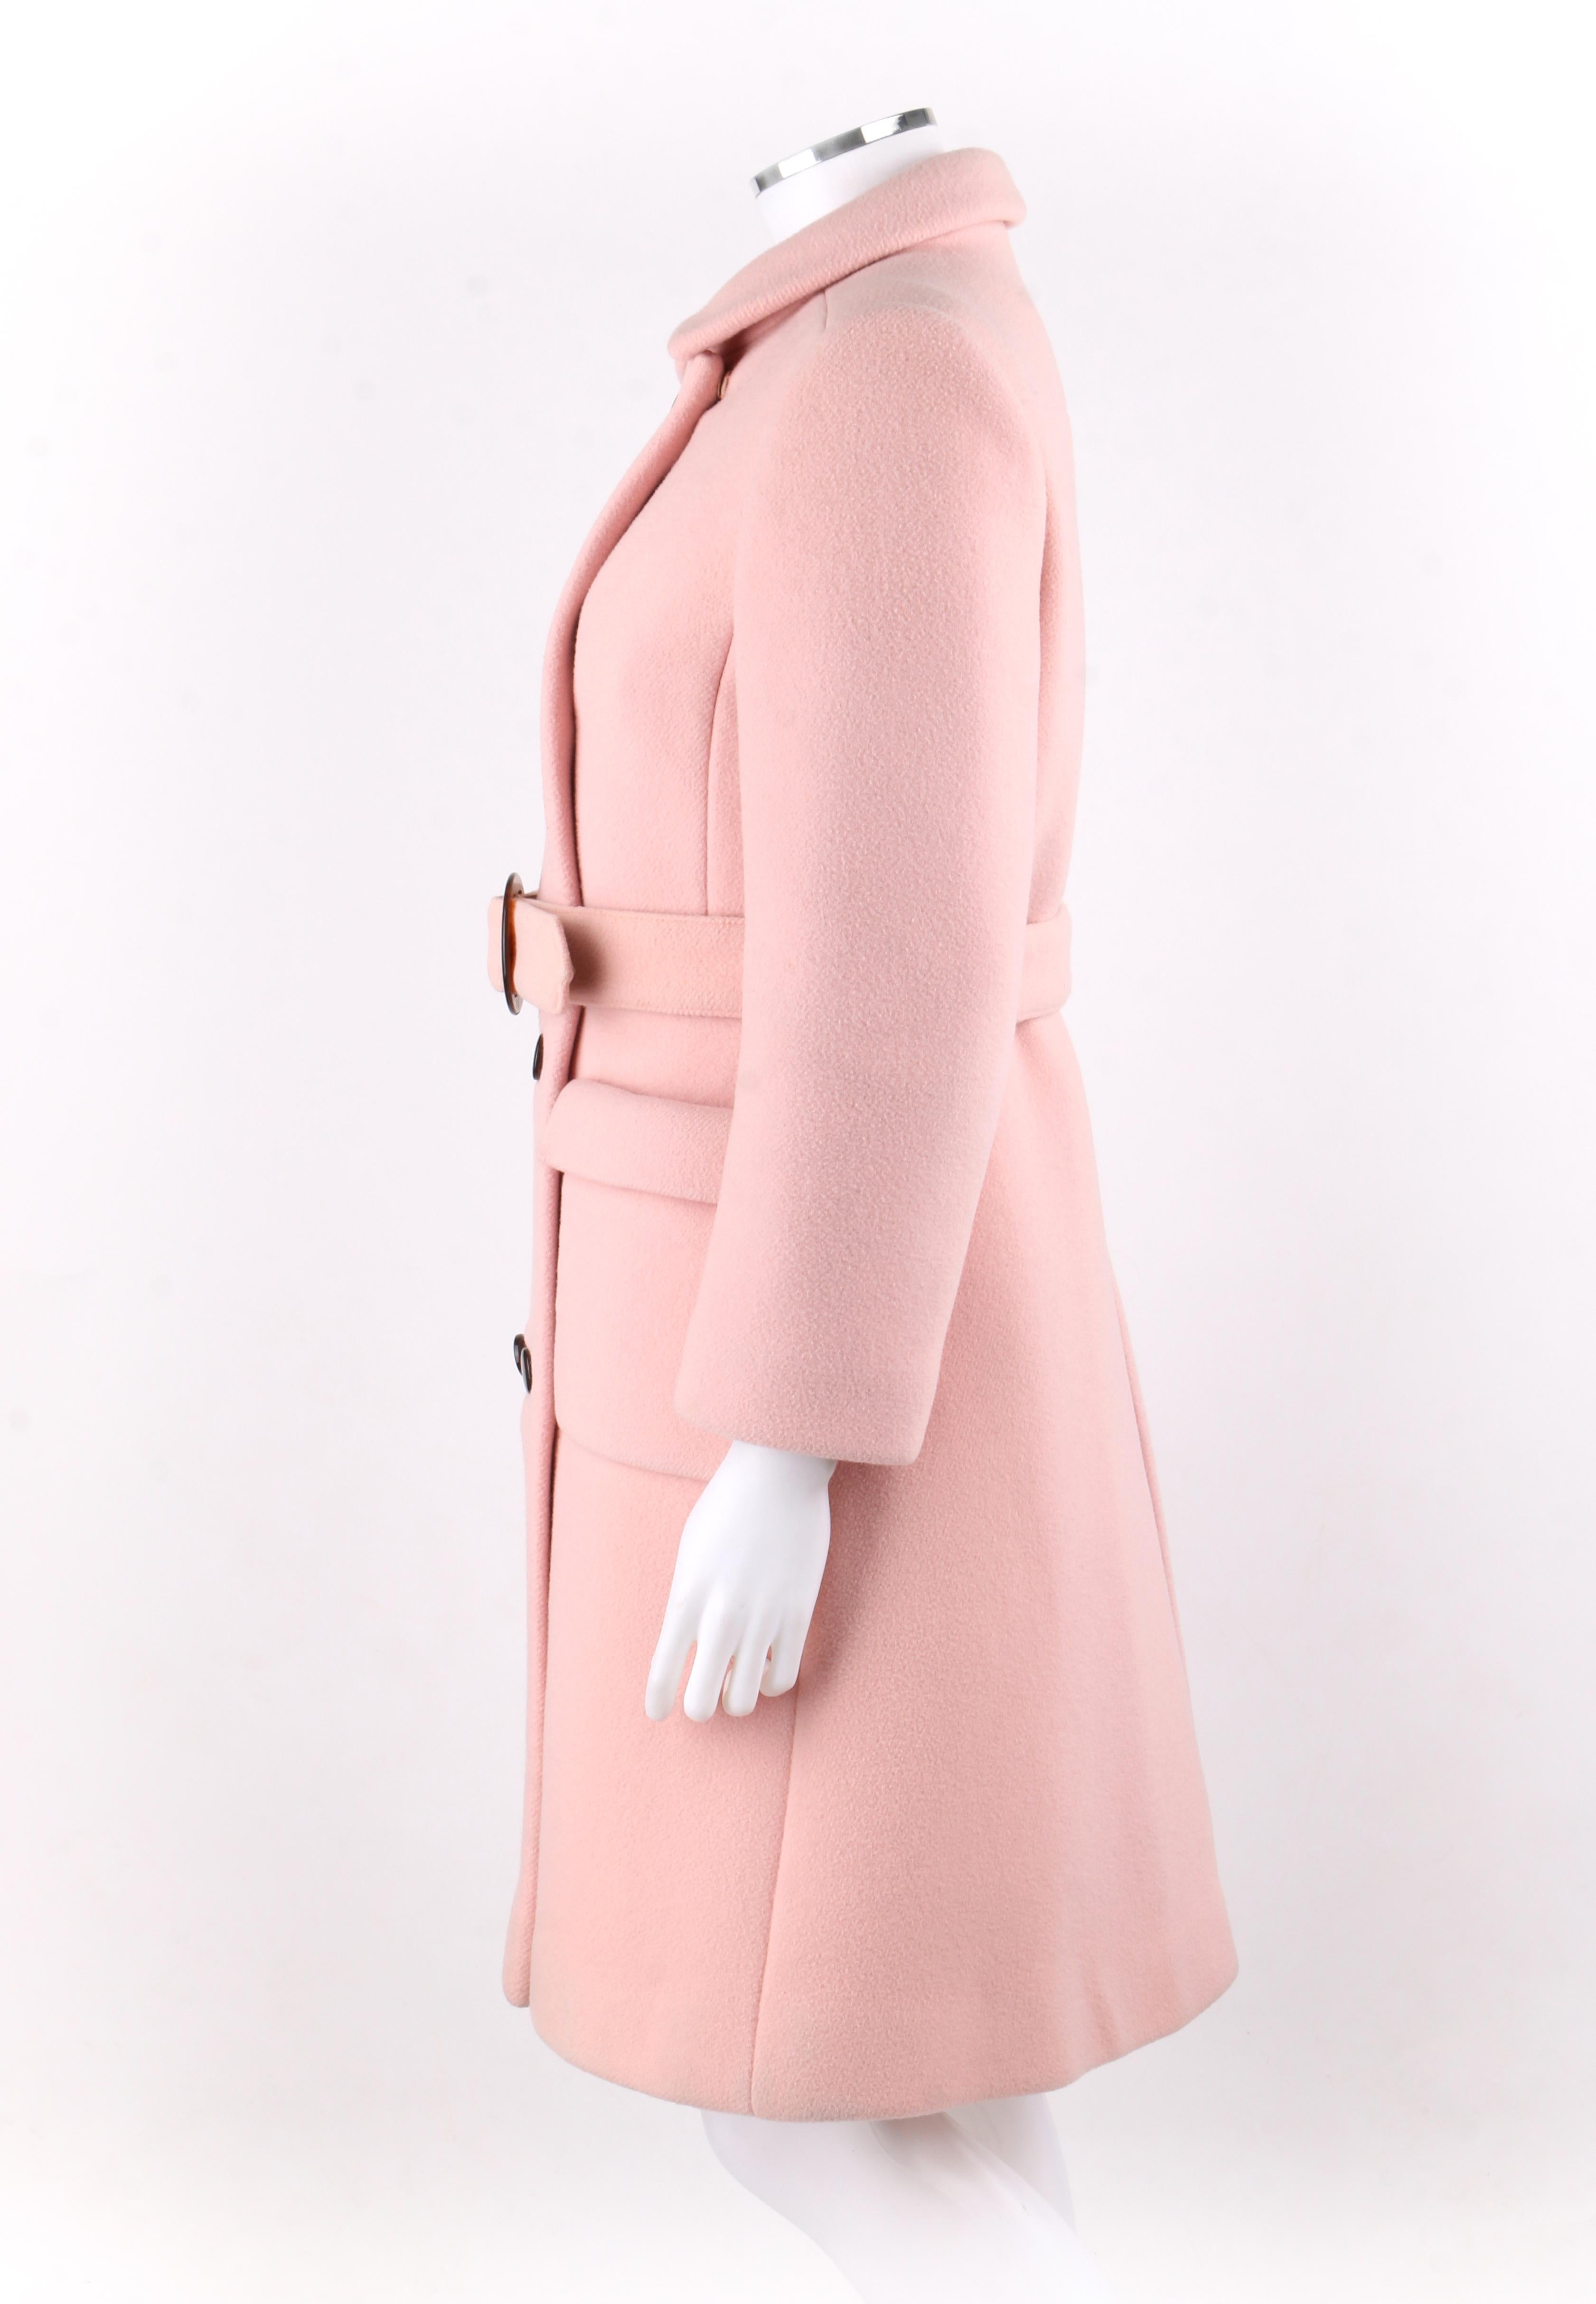 Women's CALVIN KLEIN c.1960’s Mod Soft Pink Wool Tortoise Shell Belted Top Coat